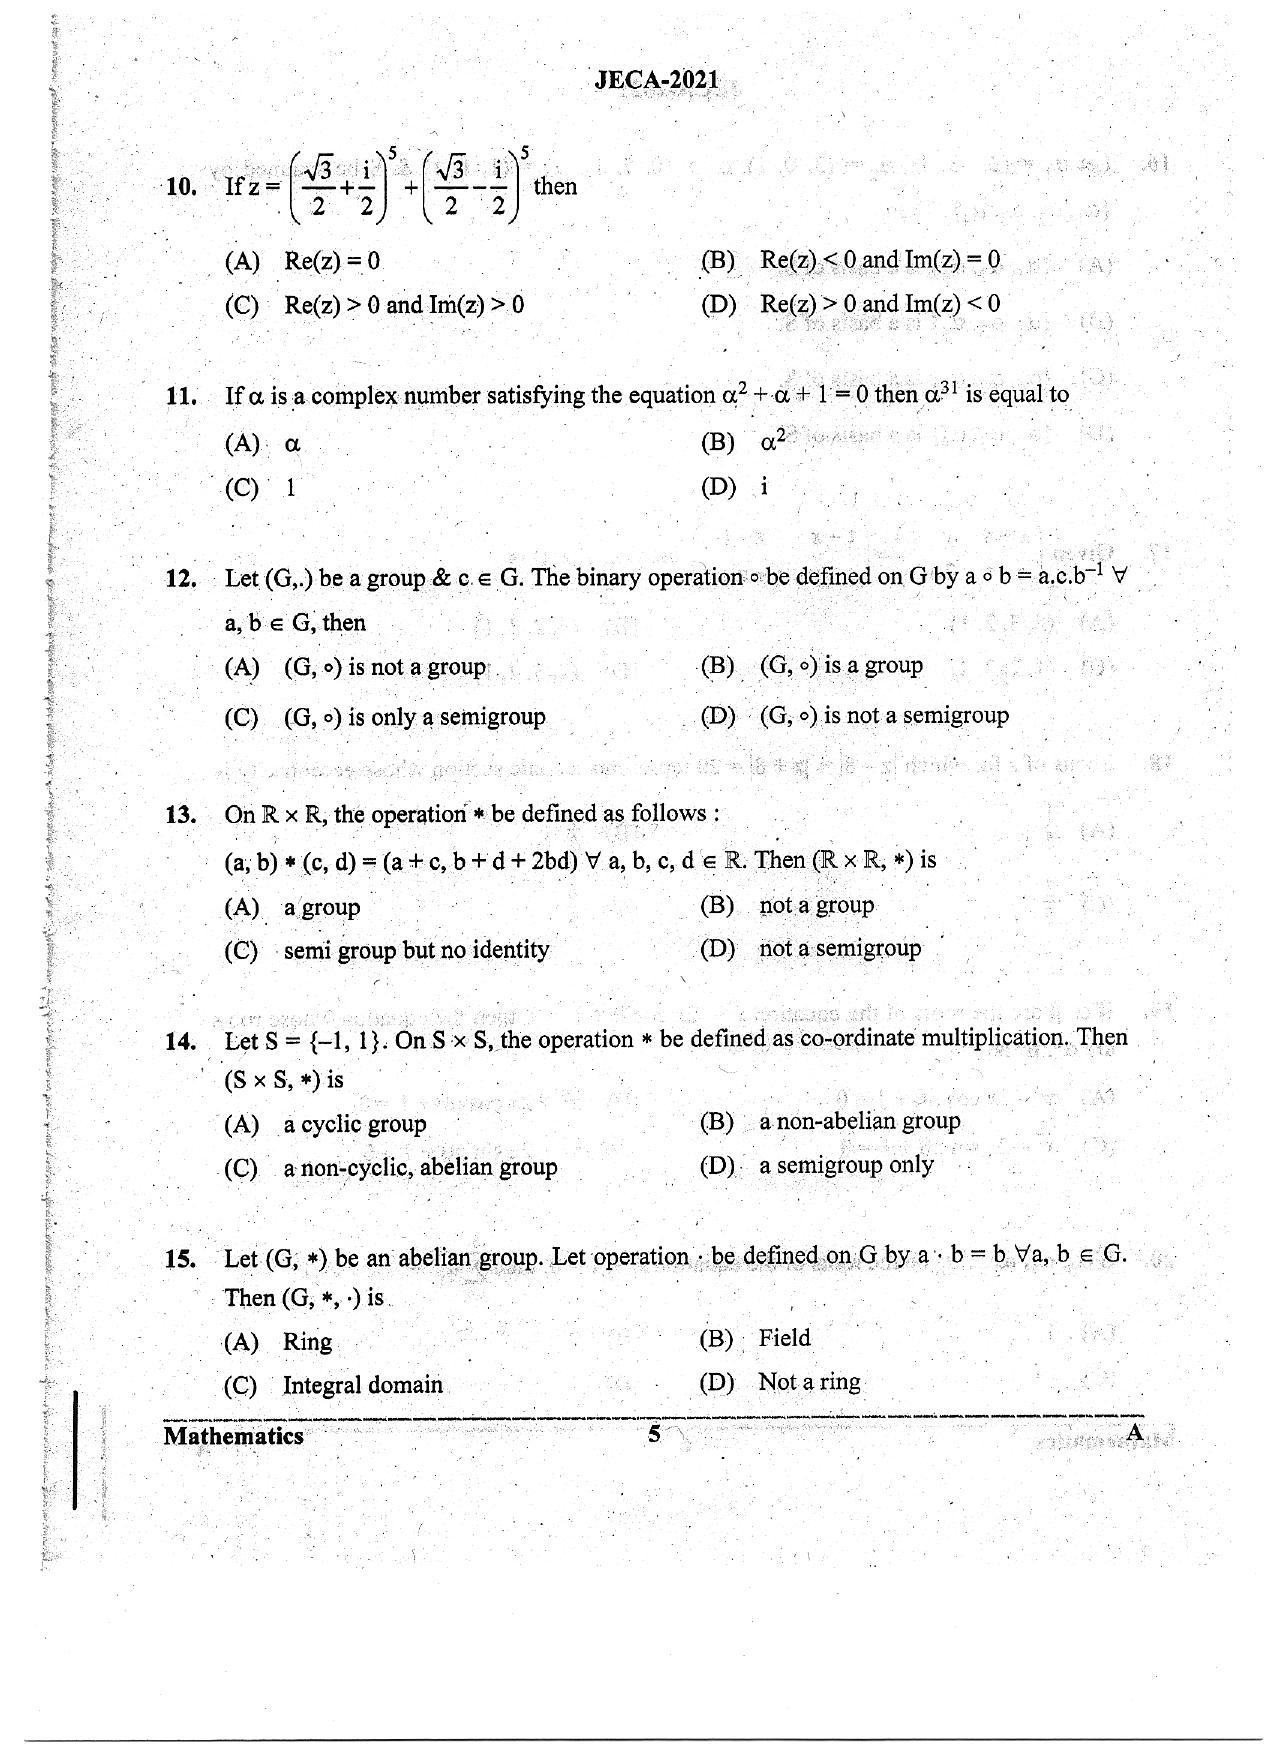 WB JECA 2021 Mathematics Question Paper - Page 5